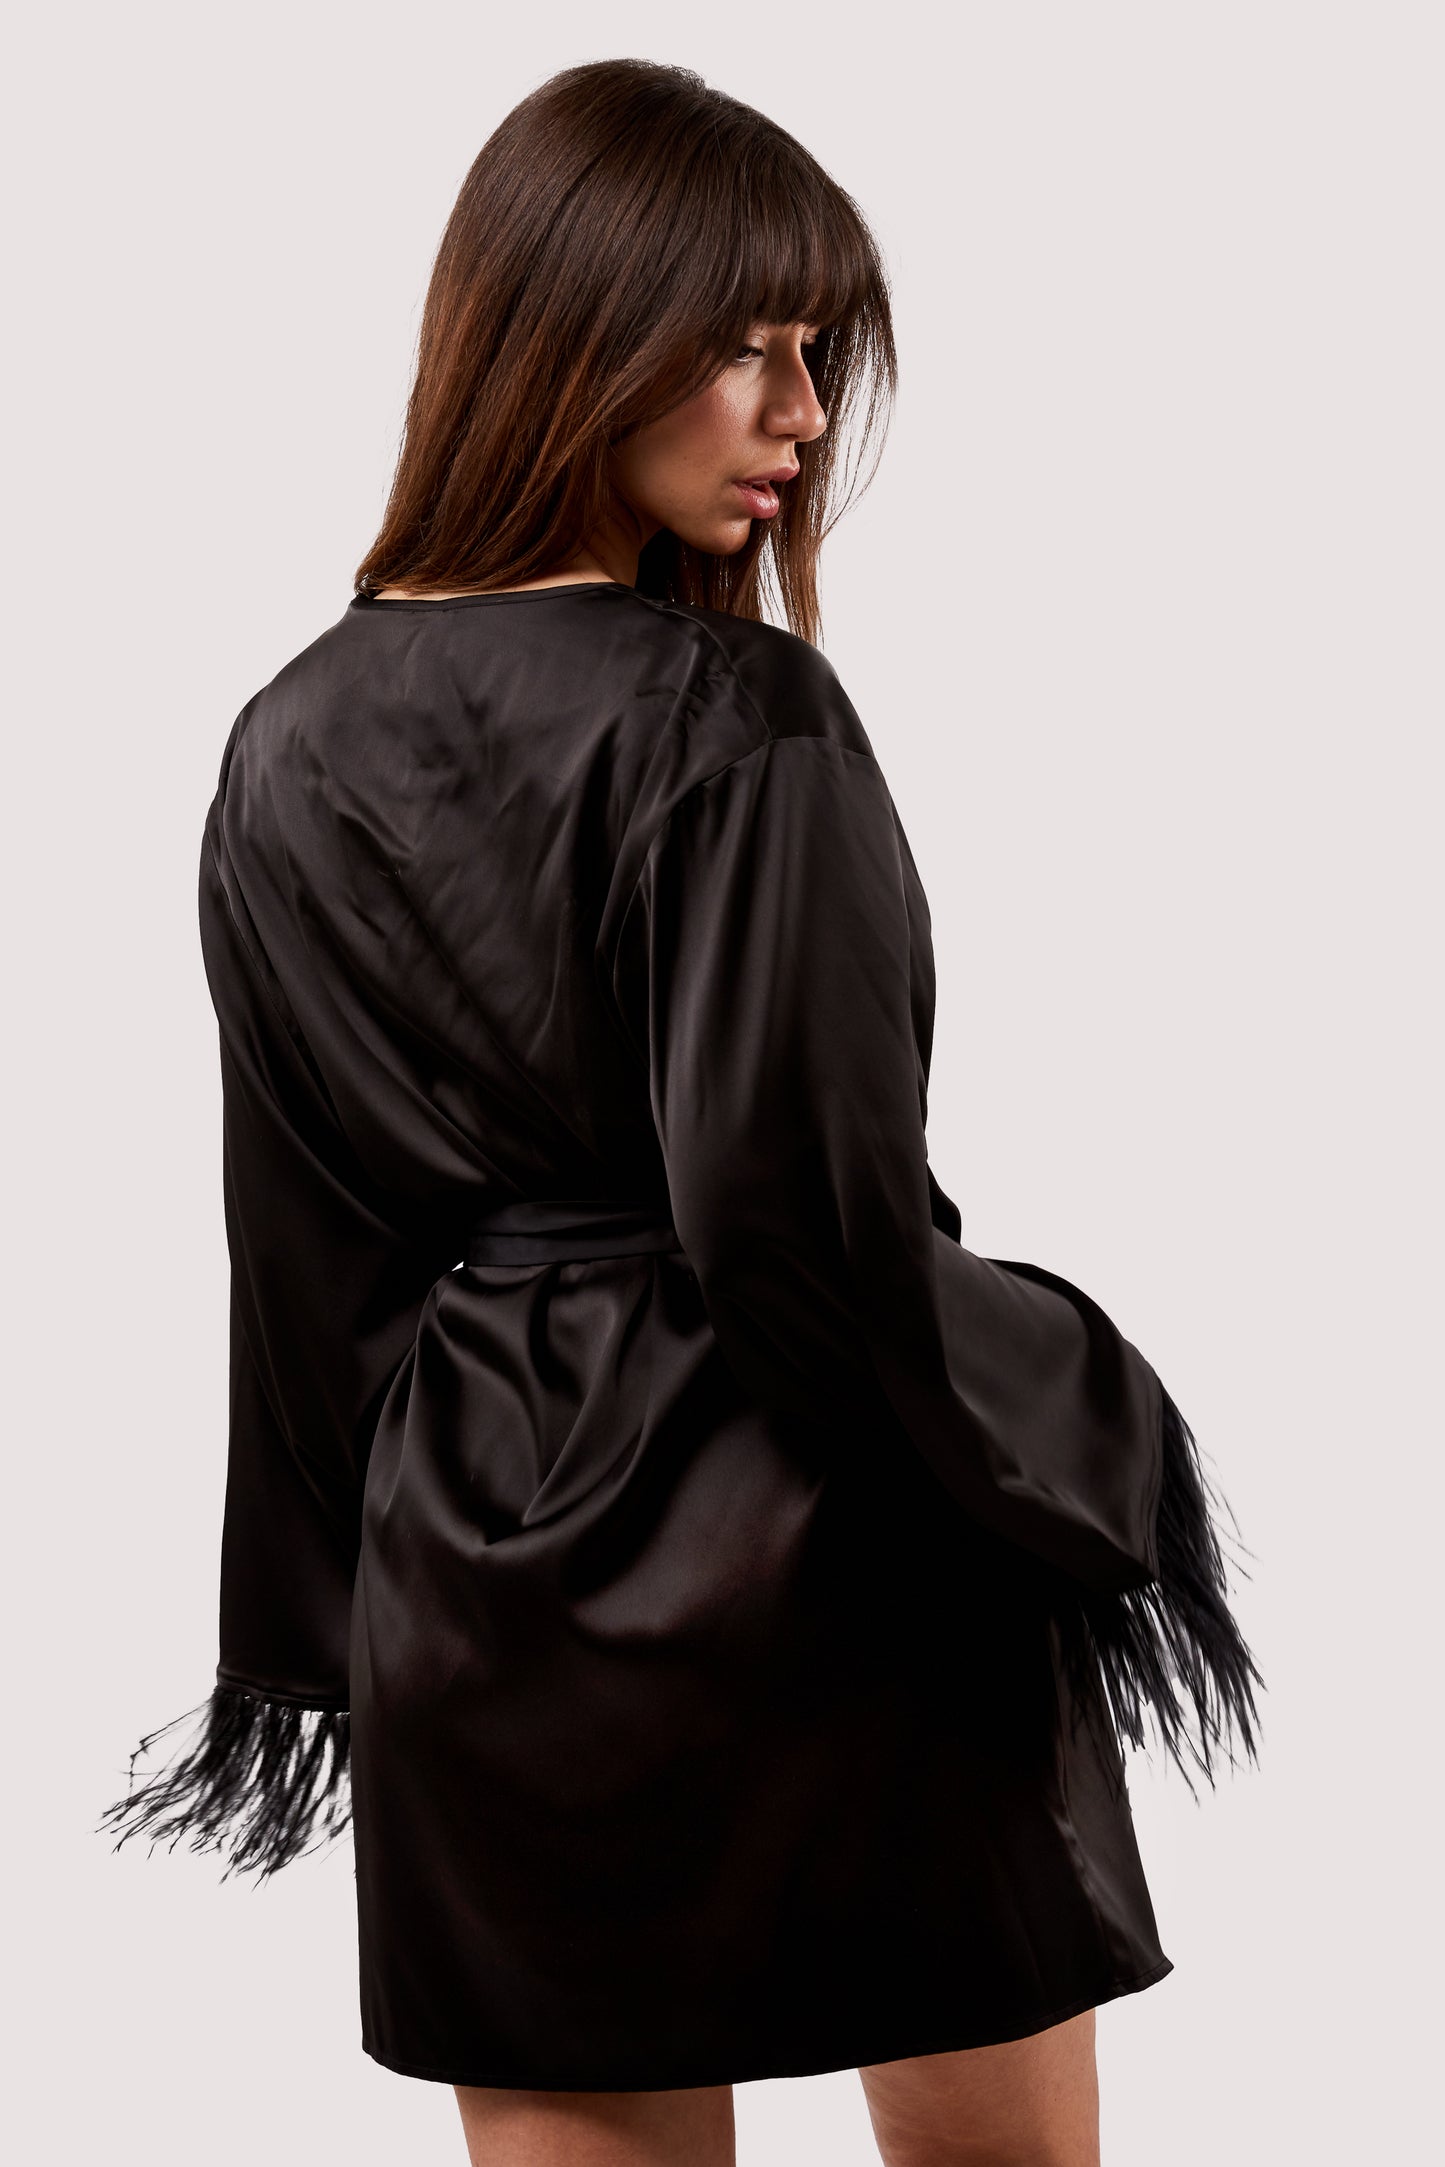 Sirus Black Satin Robe - sizes 6, 8 , 18 + 22